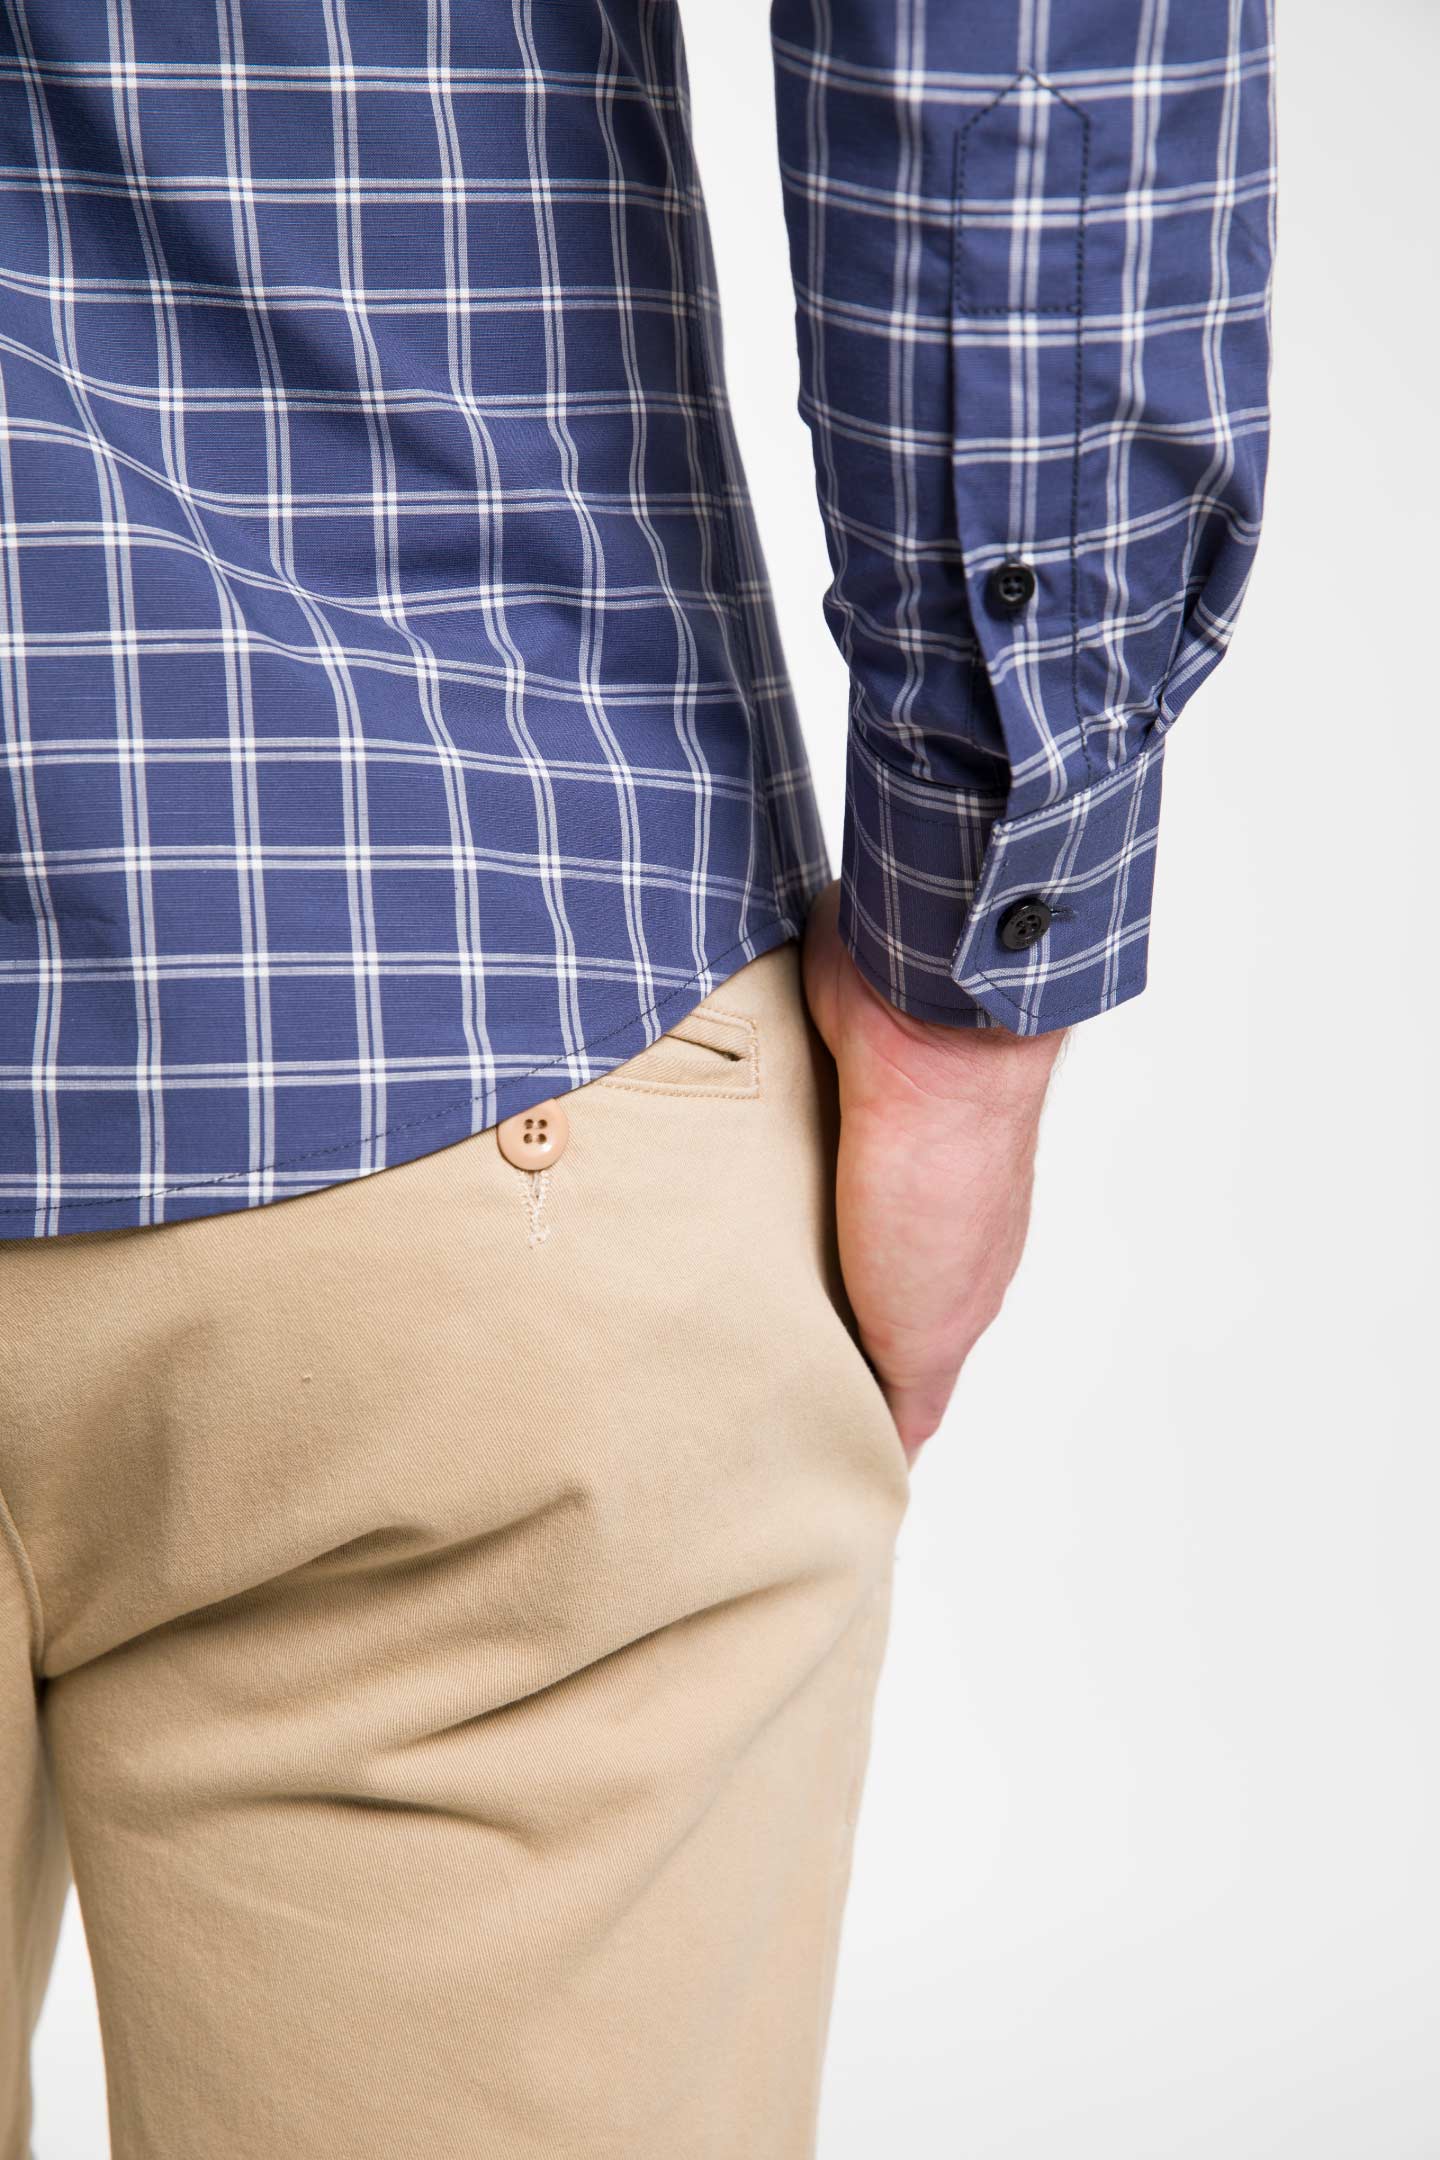 Ash & Erie Navy Check Button-Down Shirt for Short Men